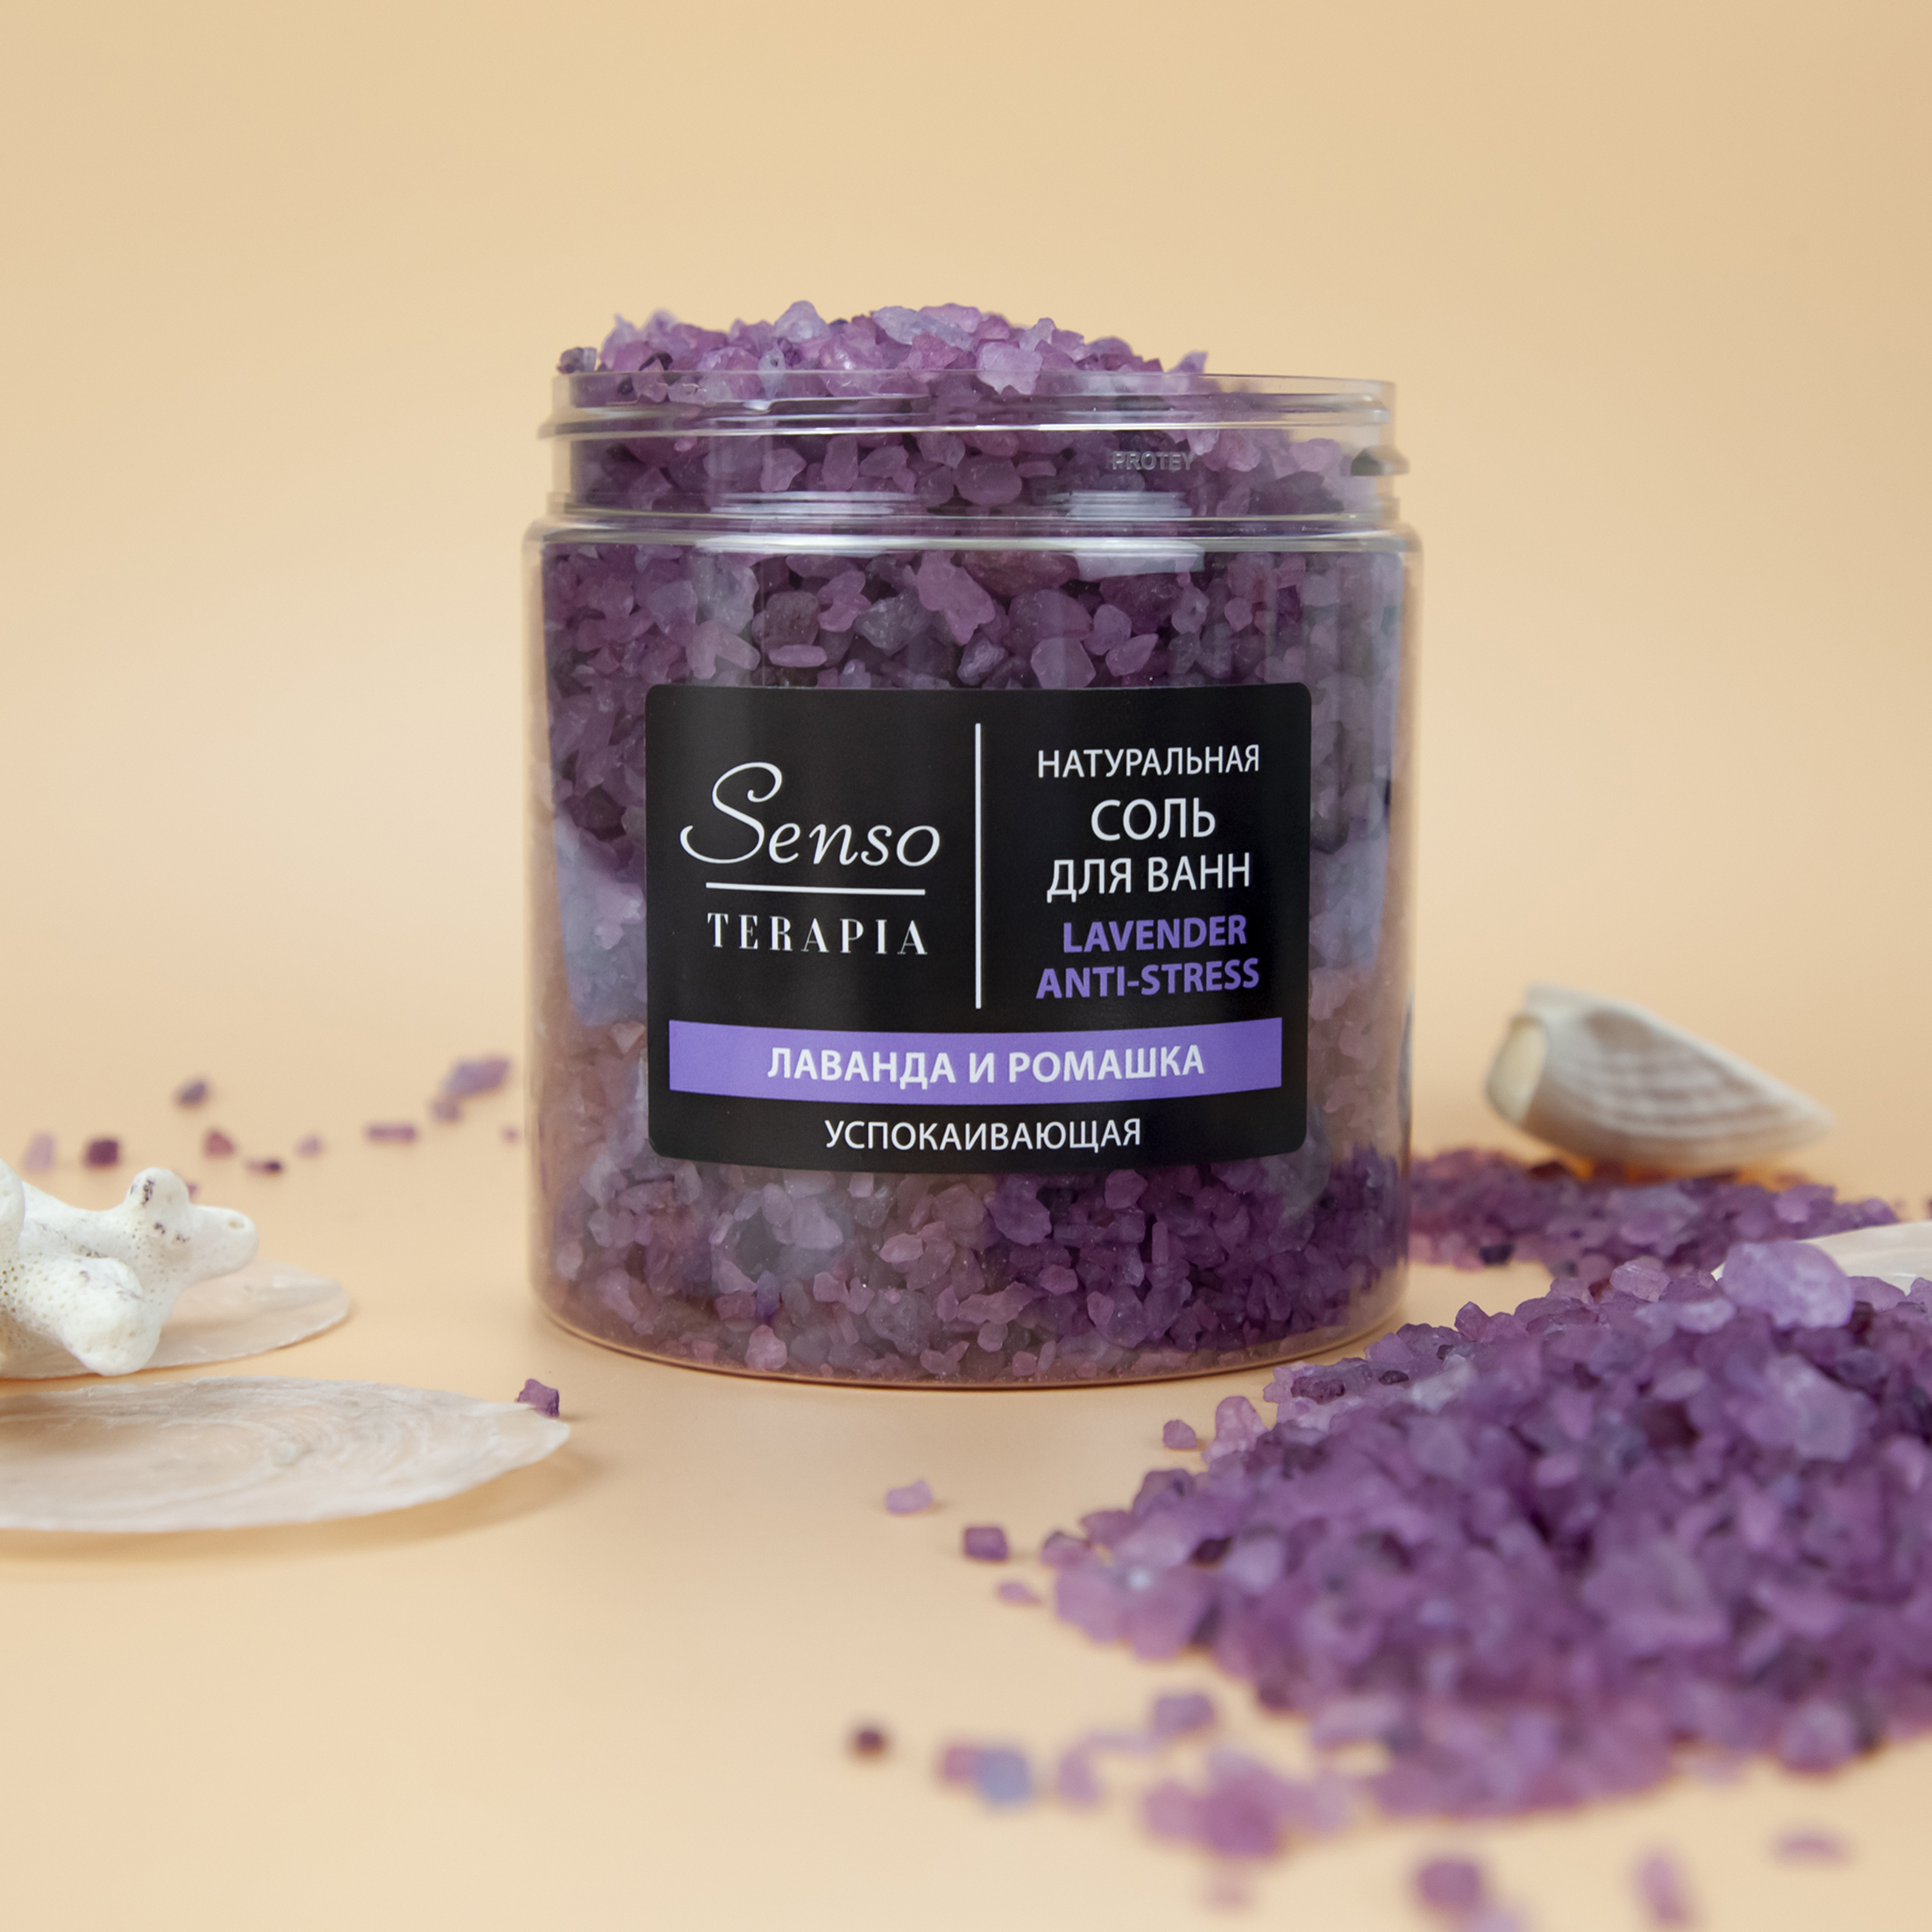 Соль для ванн Senso Terapia успокаивающая Lavender Anti-Stress 560 г - фото 9